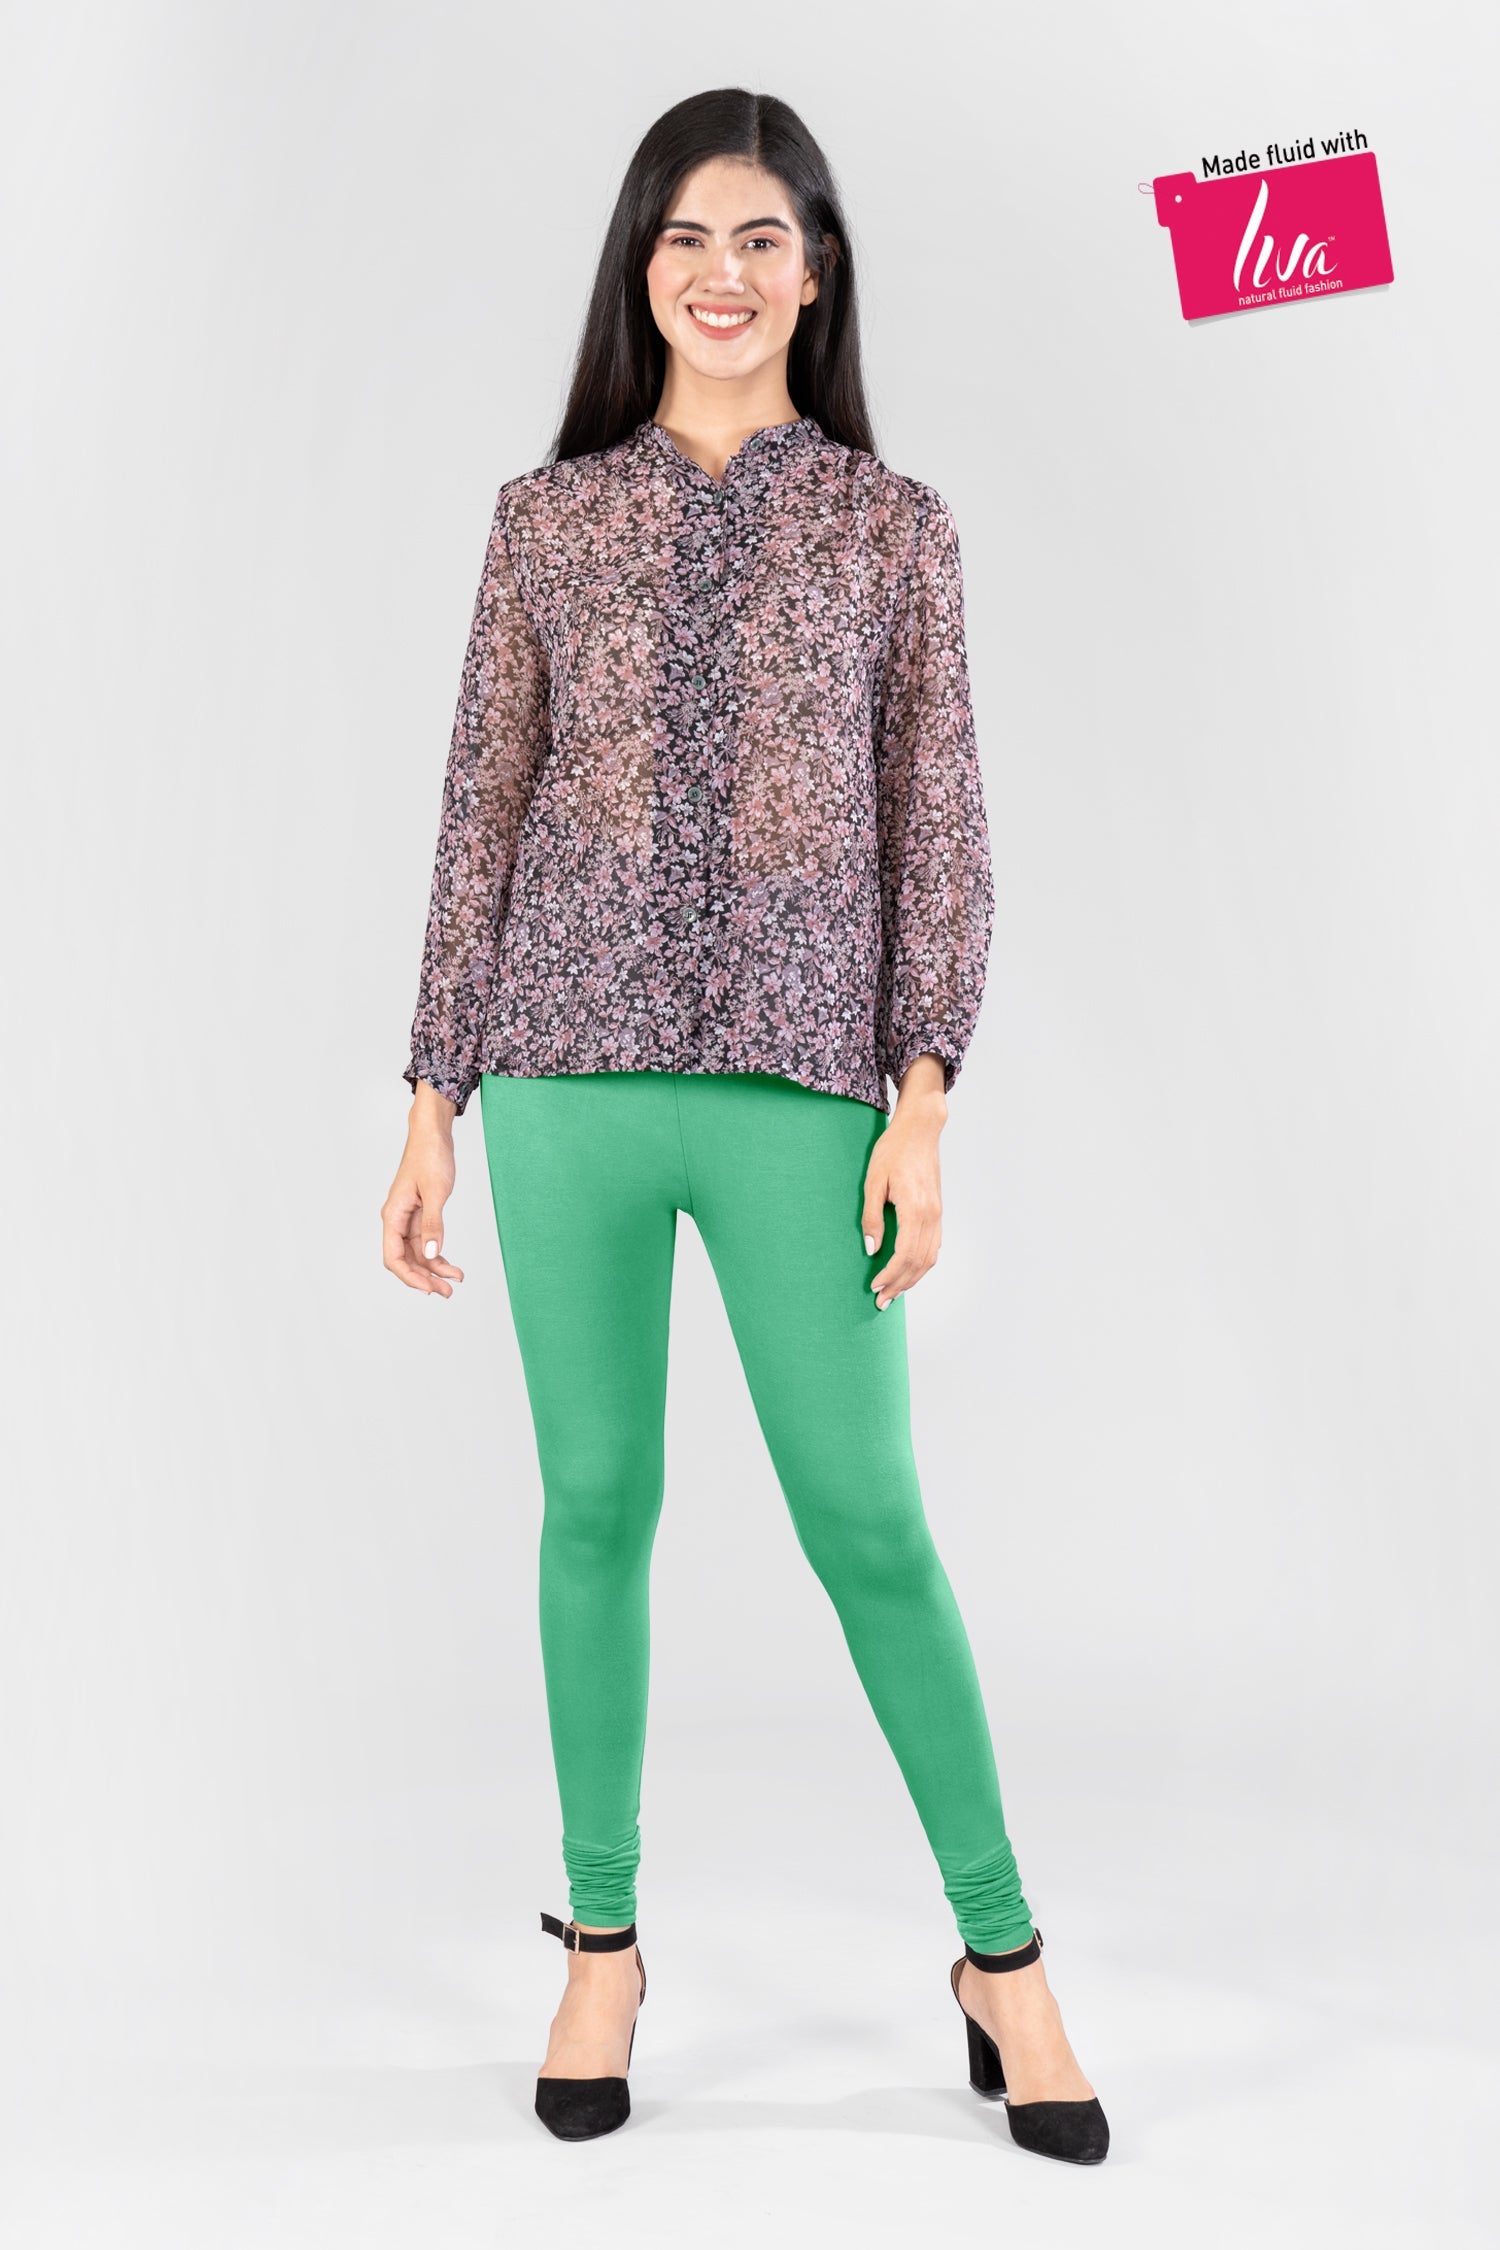 Buy Green Leggings for Women by INDIAN FLOWER Online | Ajio.com